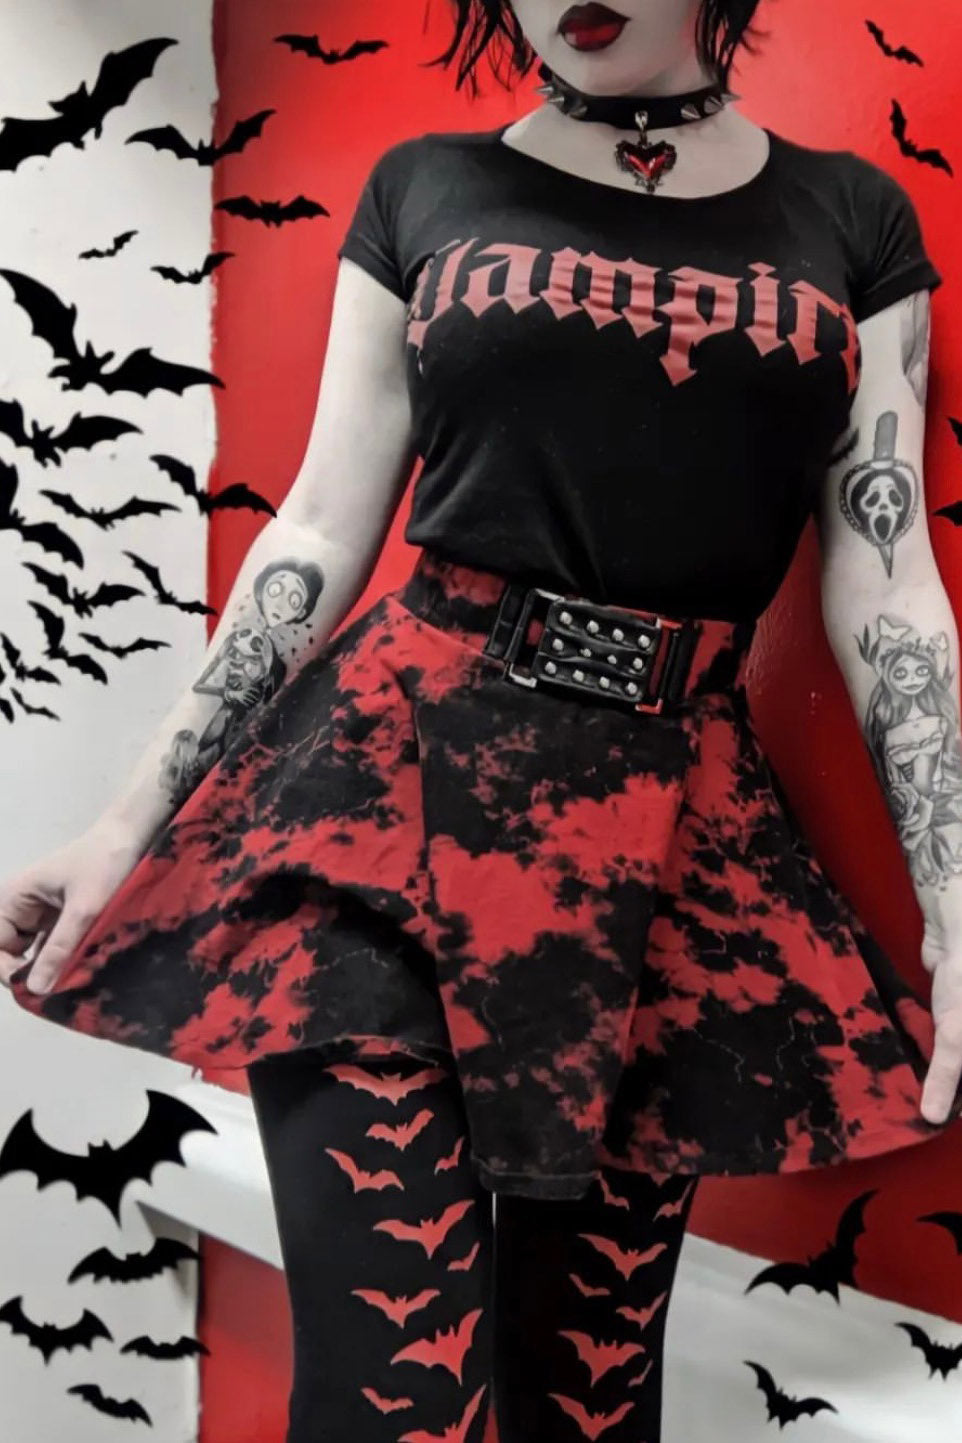 Vampire Bat Leggings [Red Bats]